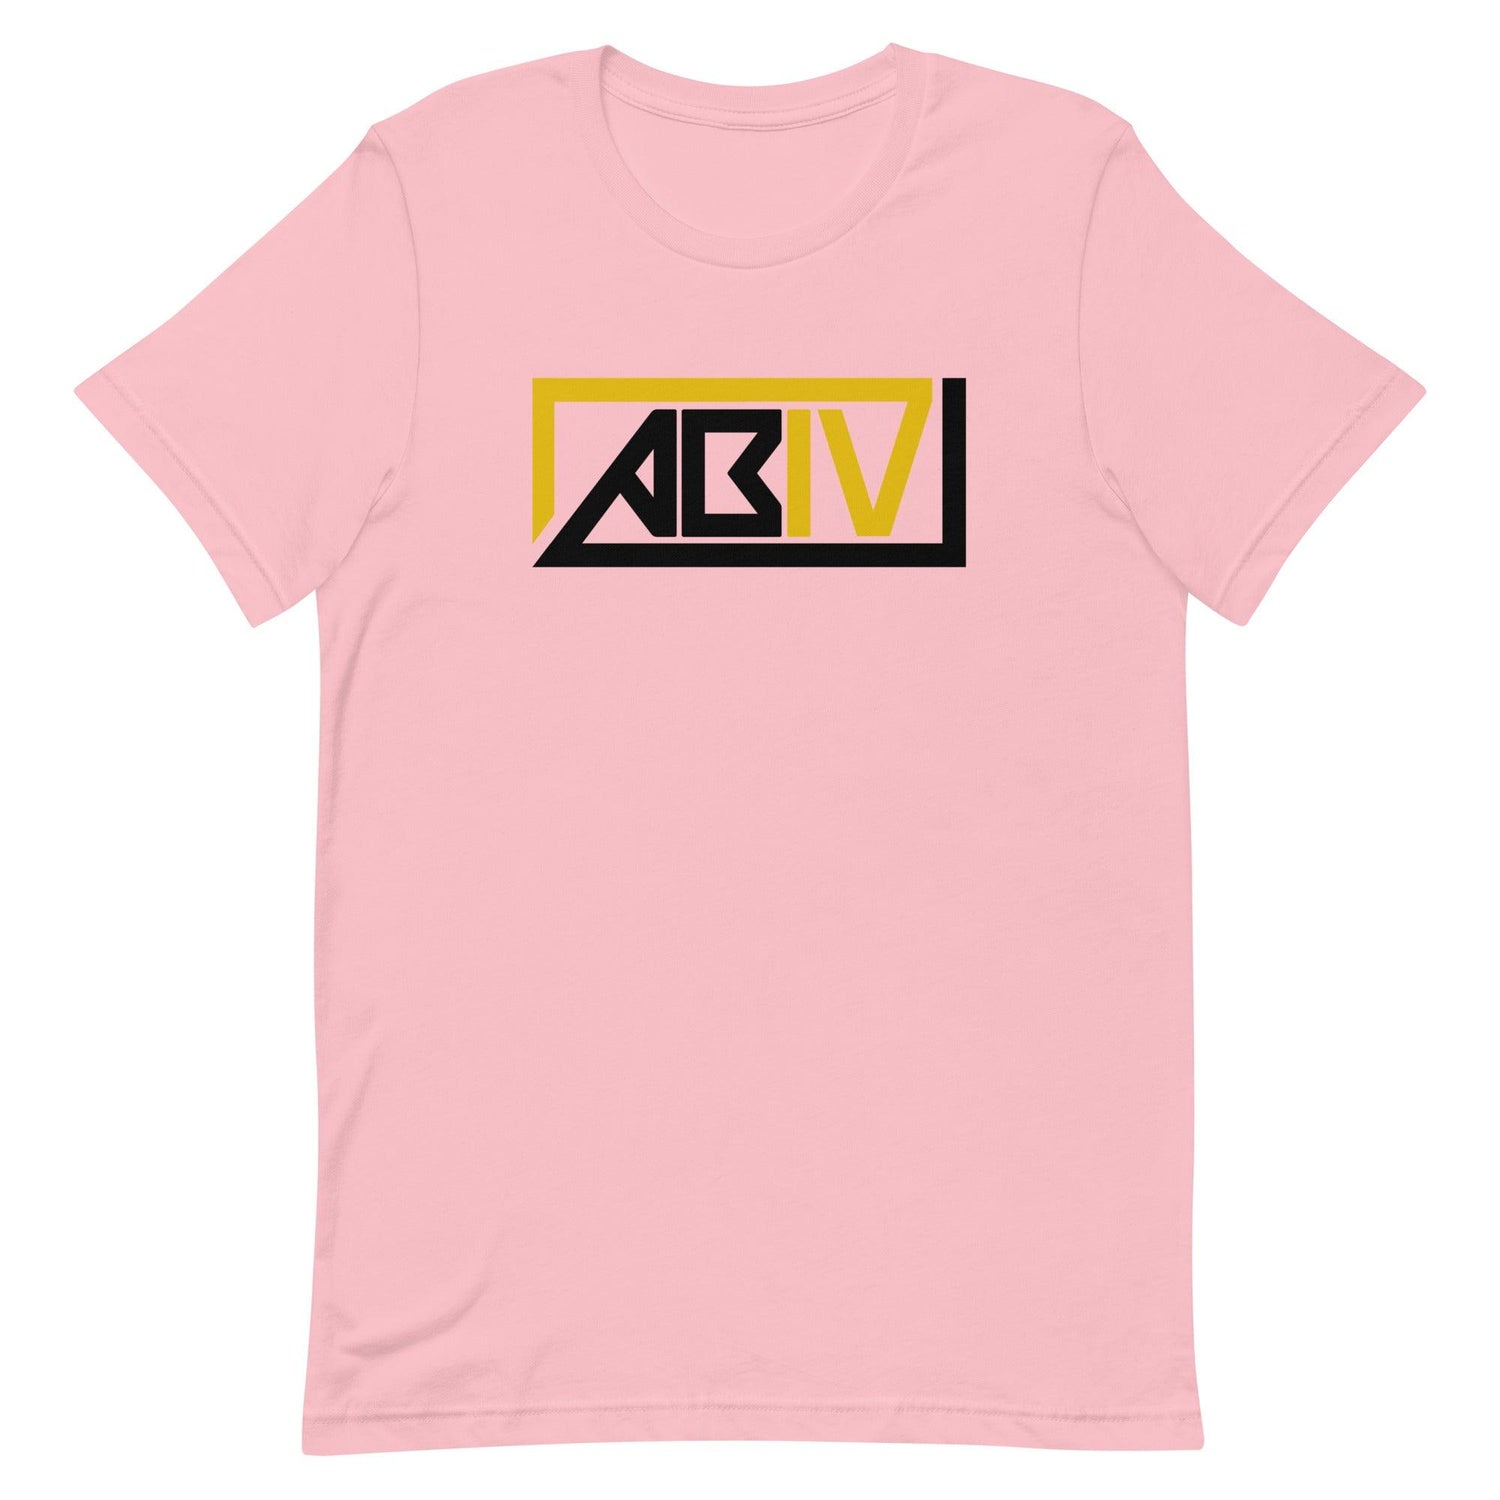 Arland Bruce IV "ABIV" t-shirt - Fan Arch